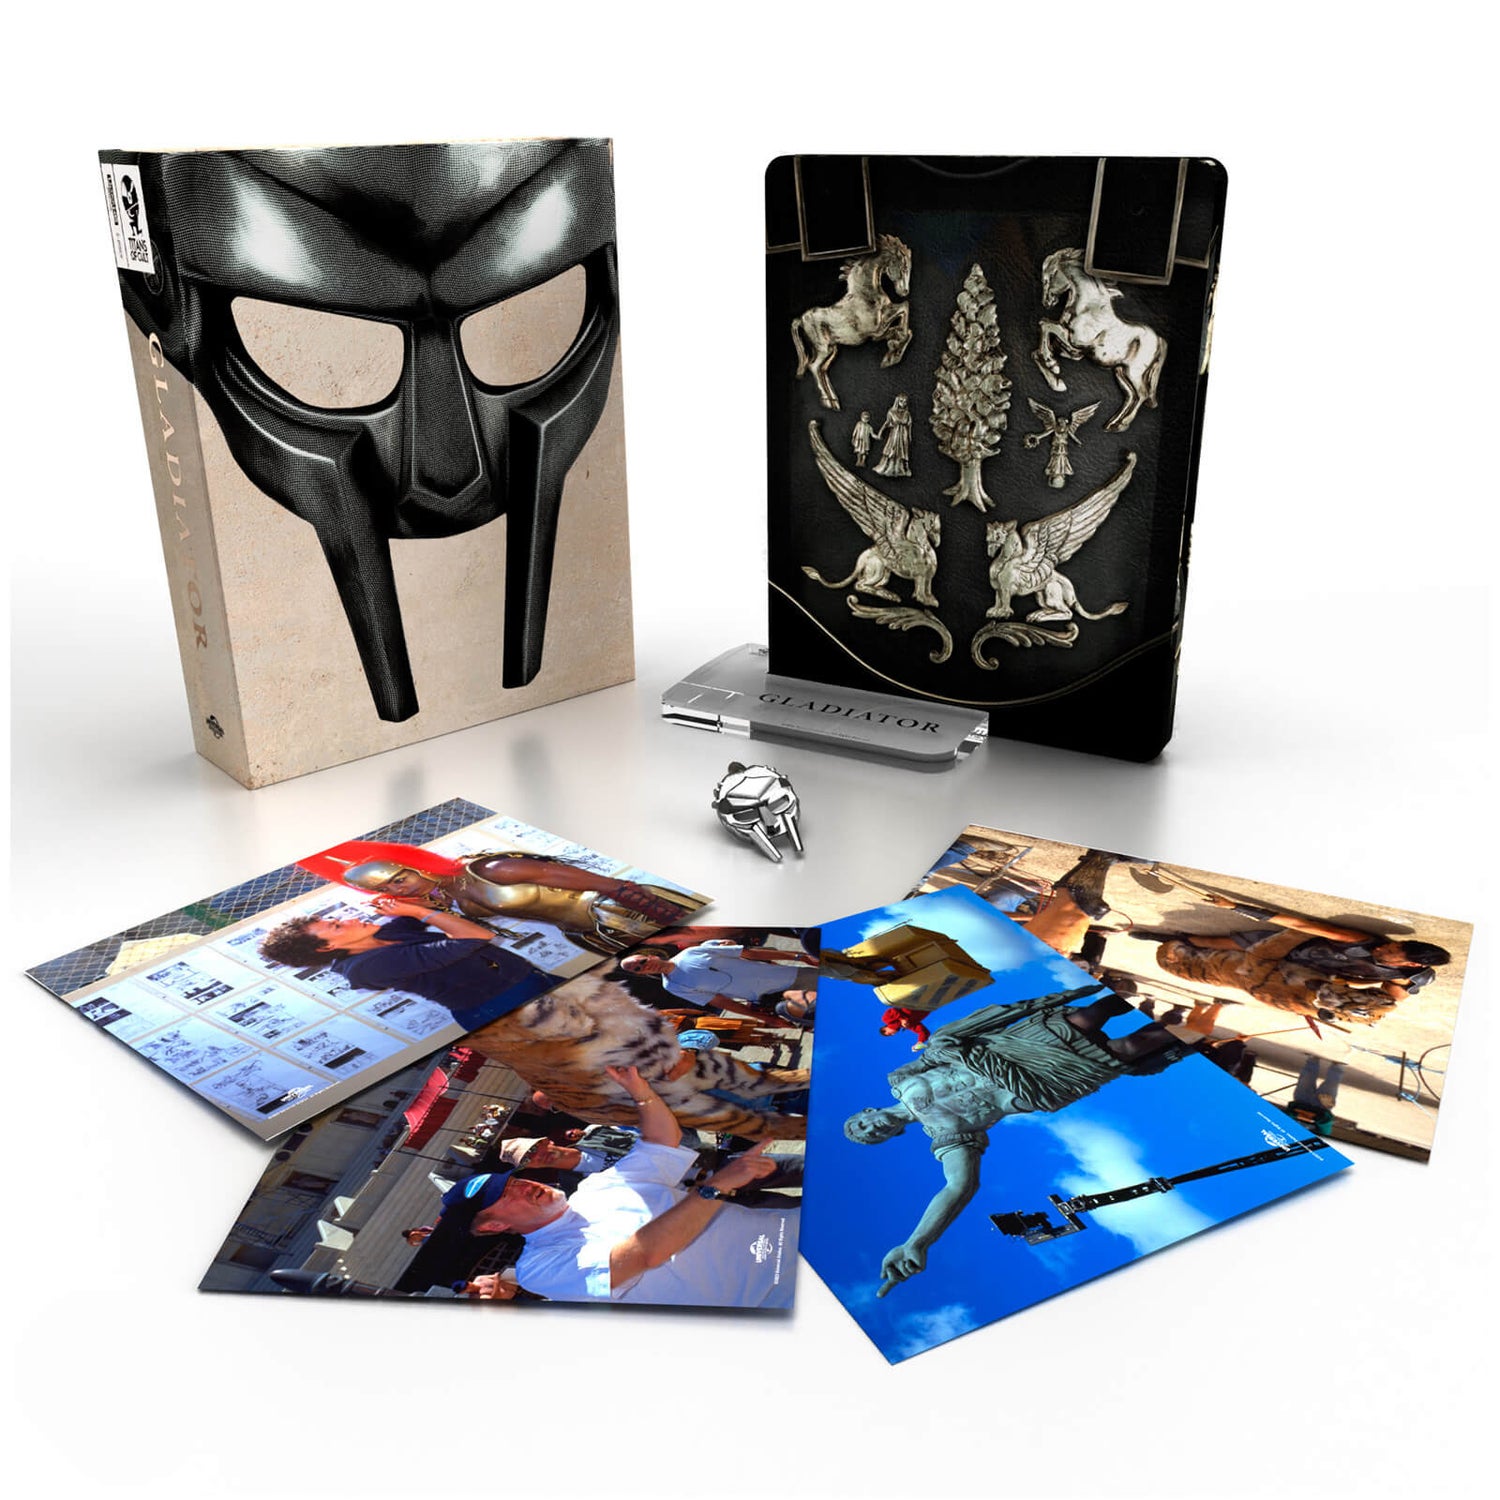 Gladiator Titans of Cult 4K Ultra HD Steelbook (includes Blu-ray)